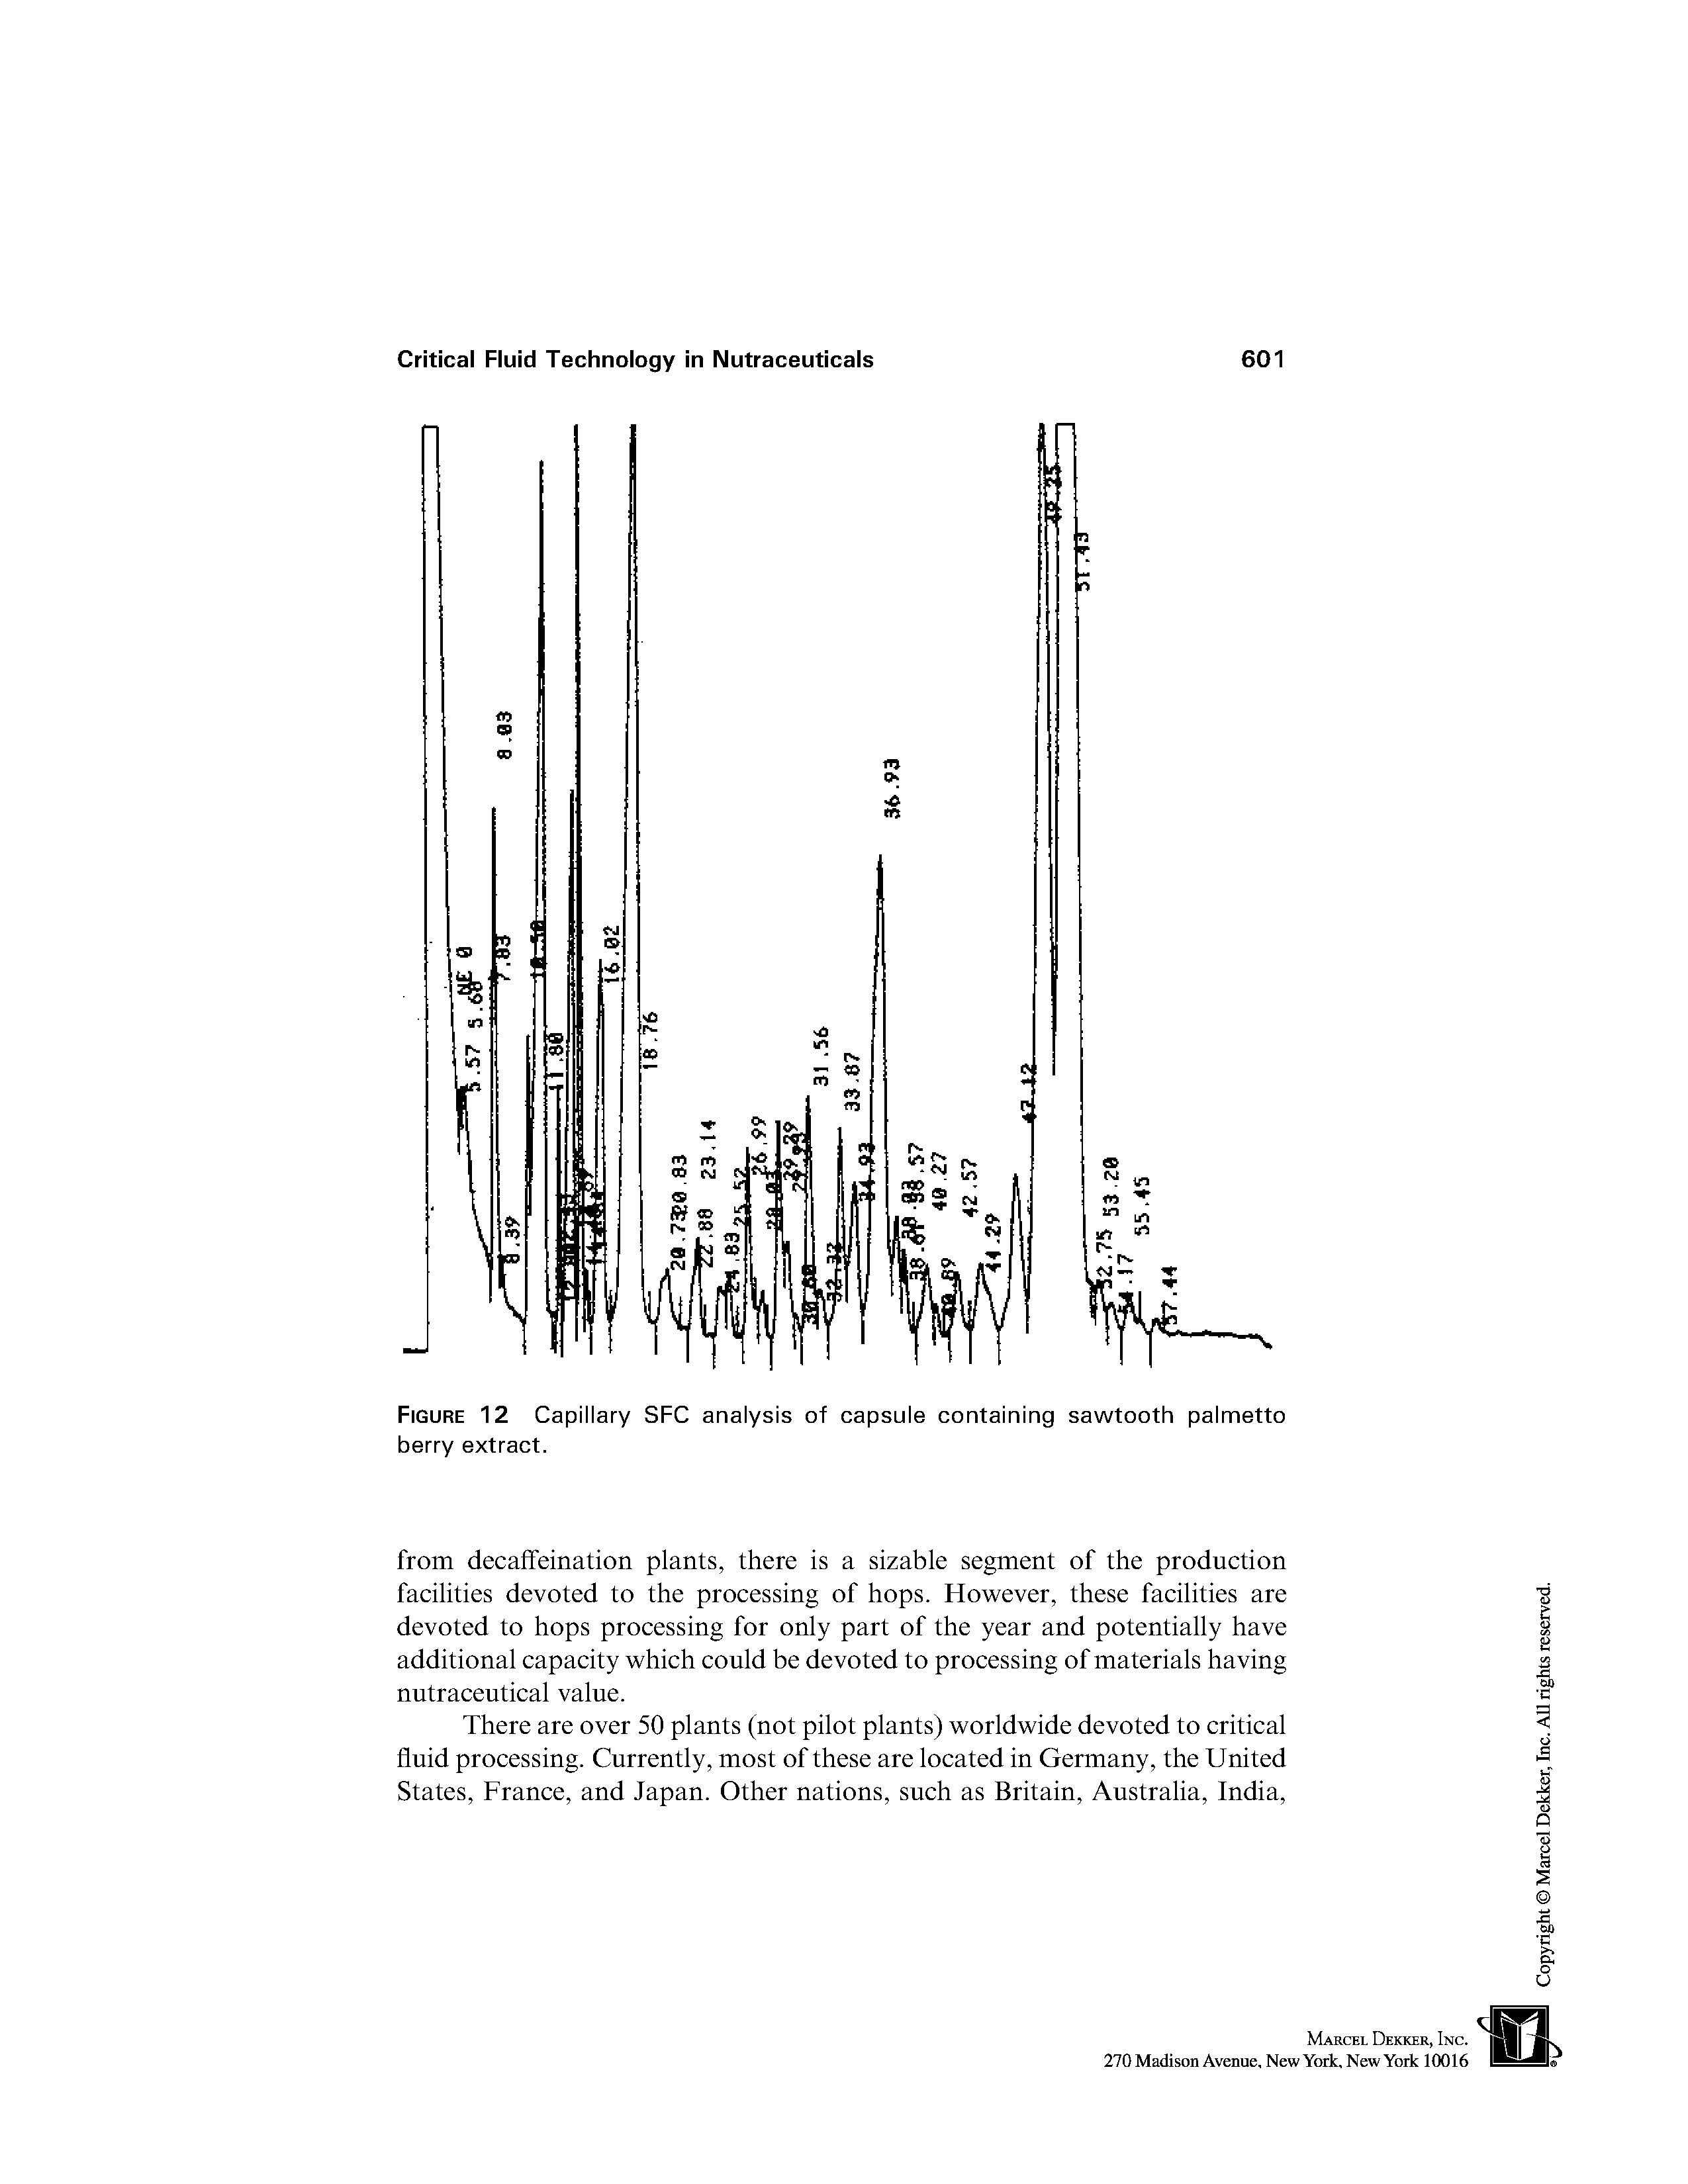 Figure 12 Capillary SFC analysis of capsule containing sawtooth palmetto berry extract.